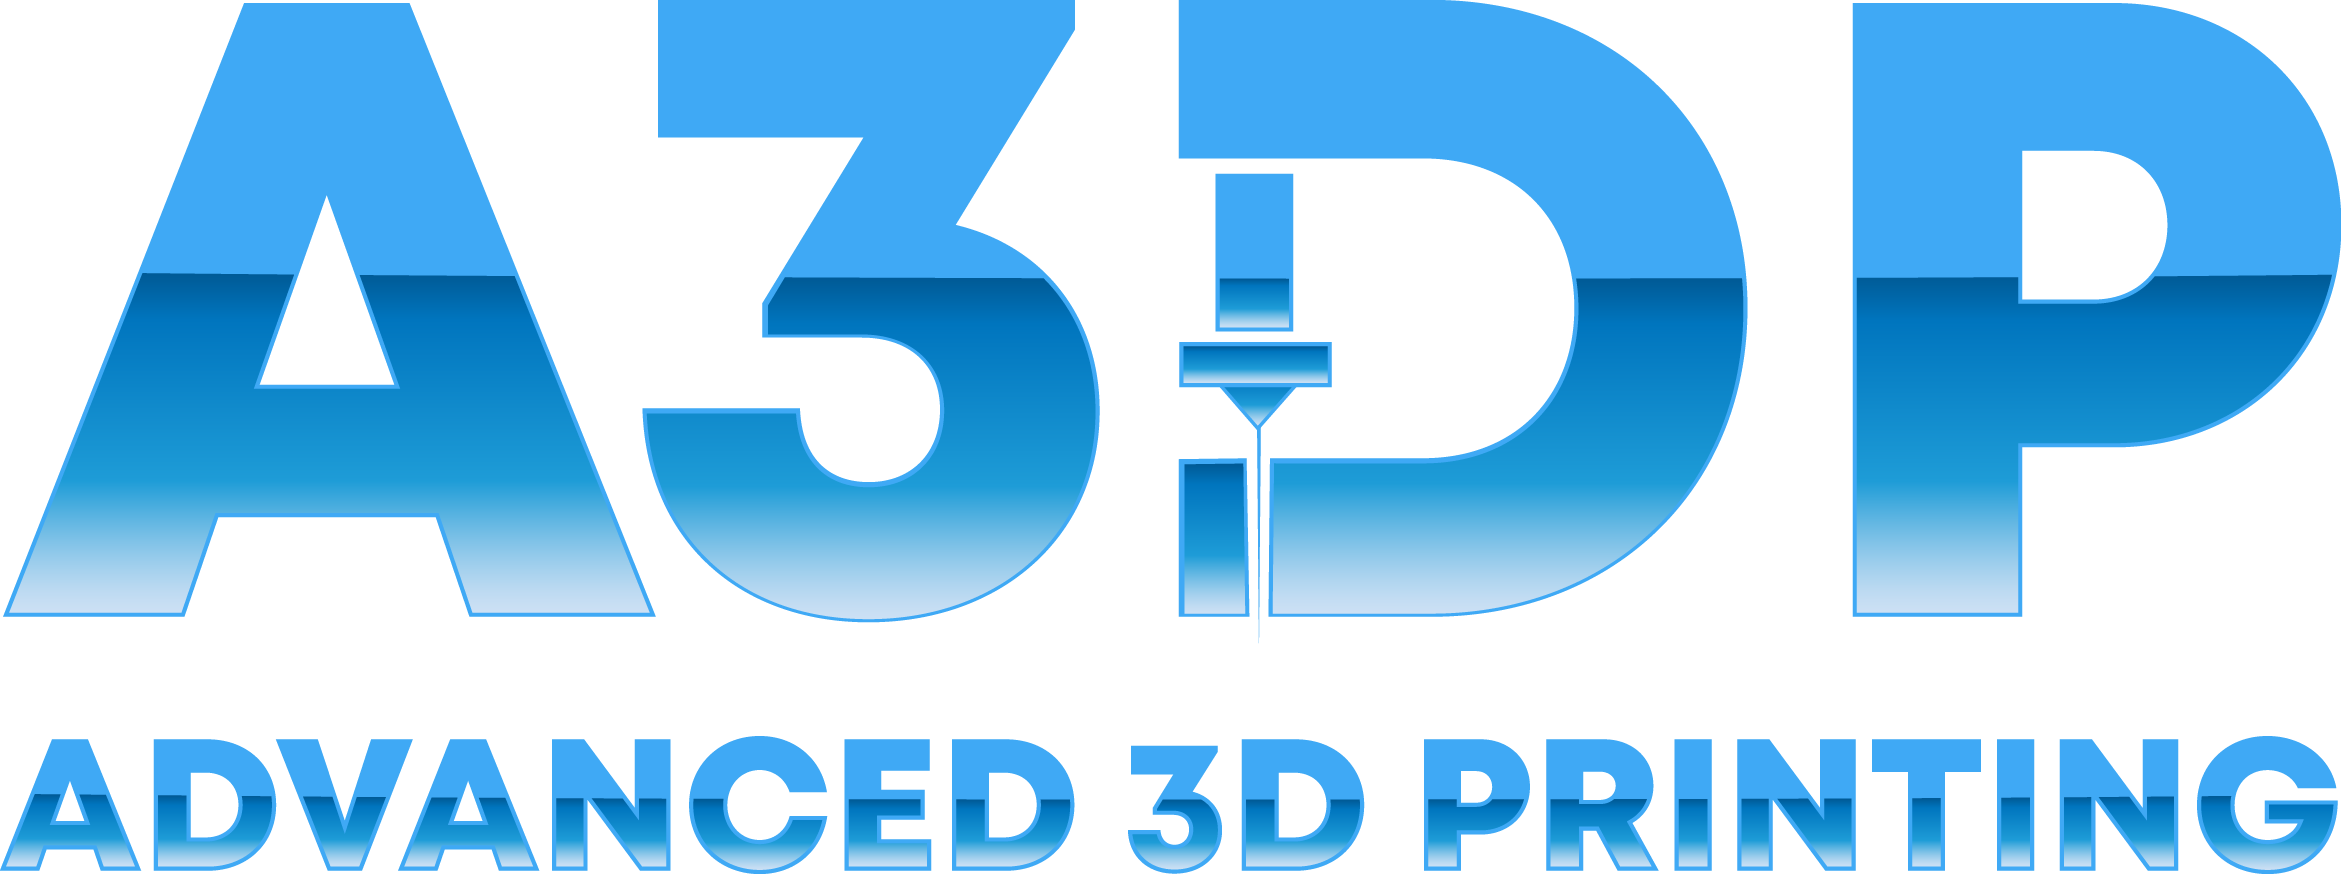 Advanced 3D Printing Forums